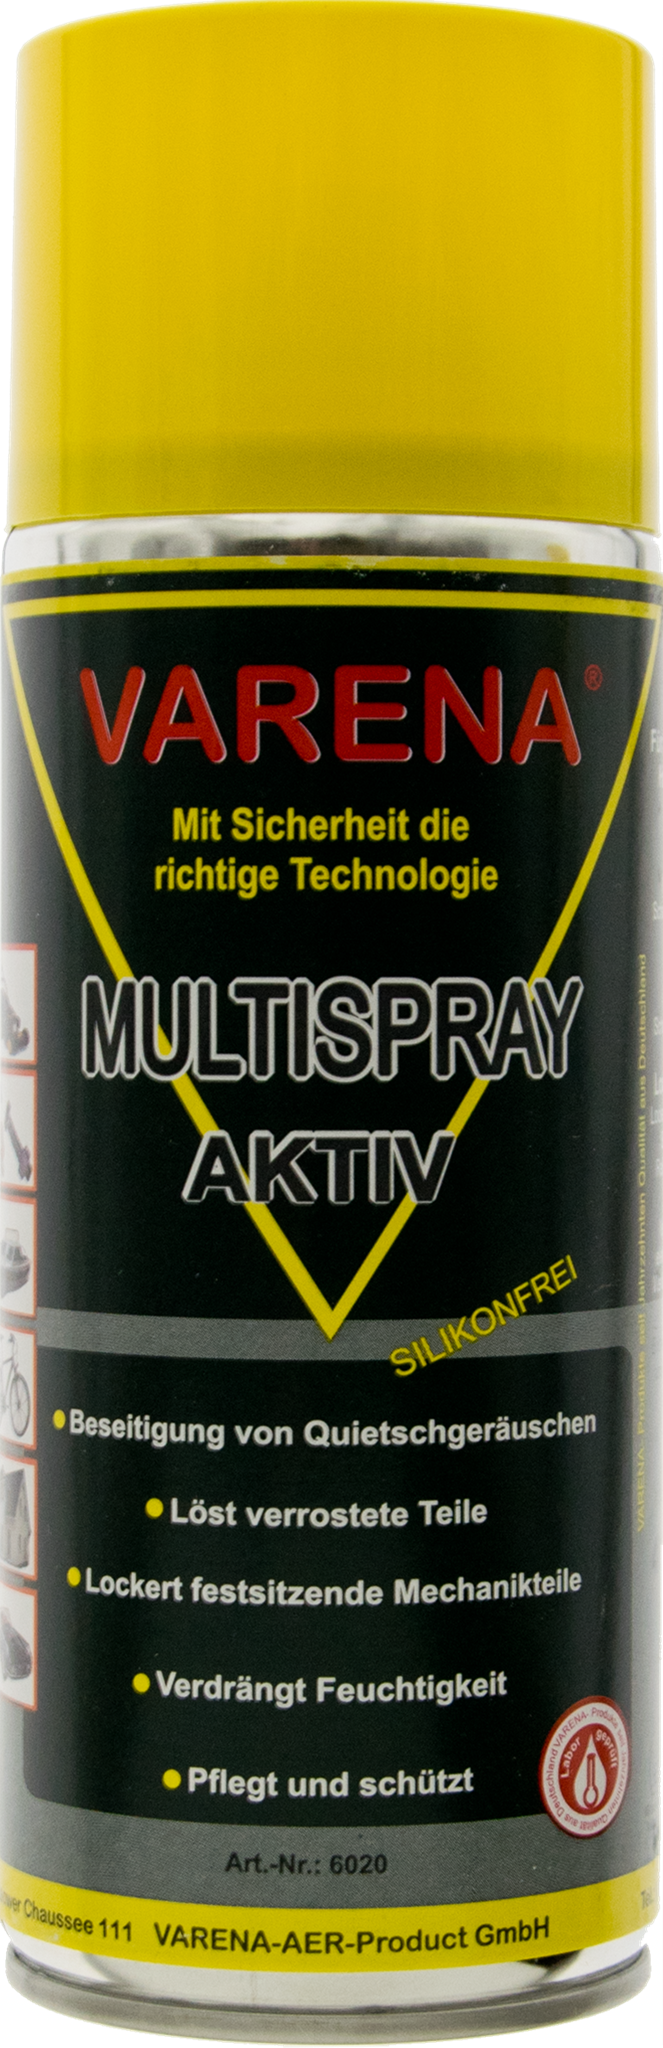 Picture of Multispray Aktiv